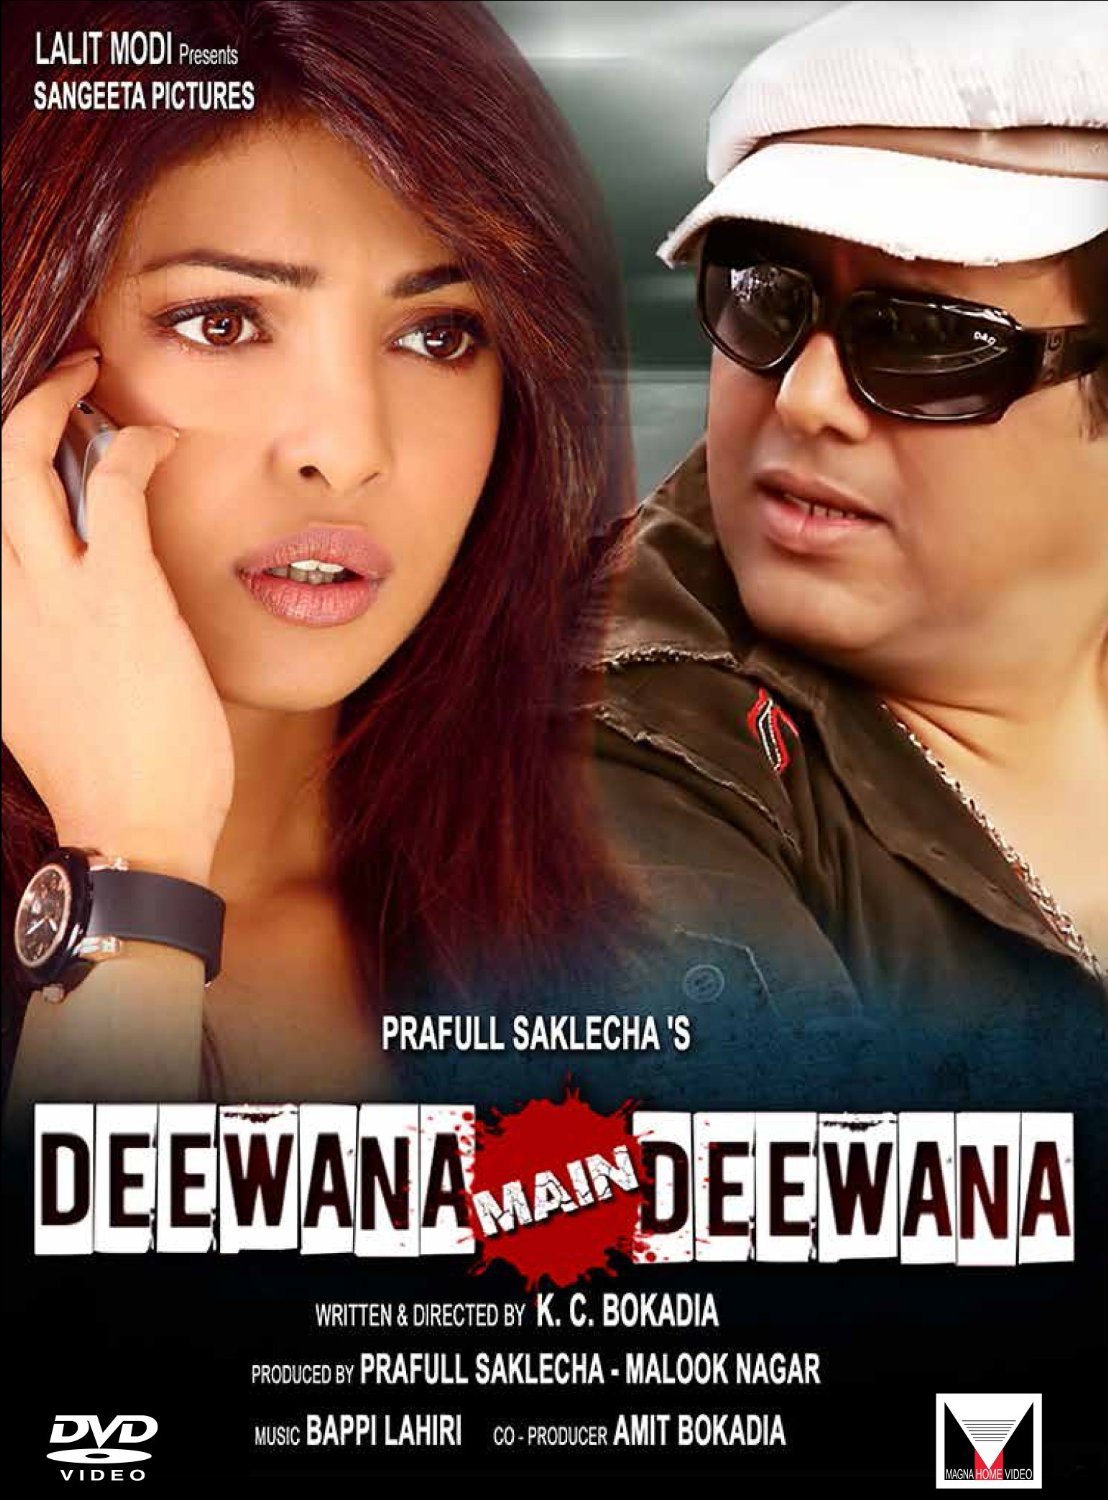 Deewana Main Deewana 2013 3676 Poster.jpg